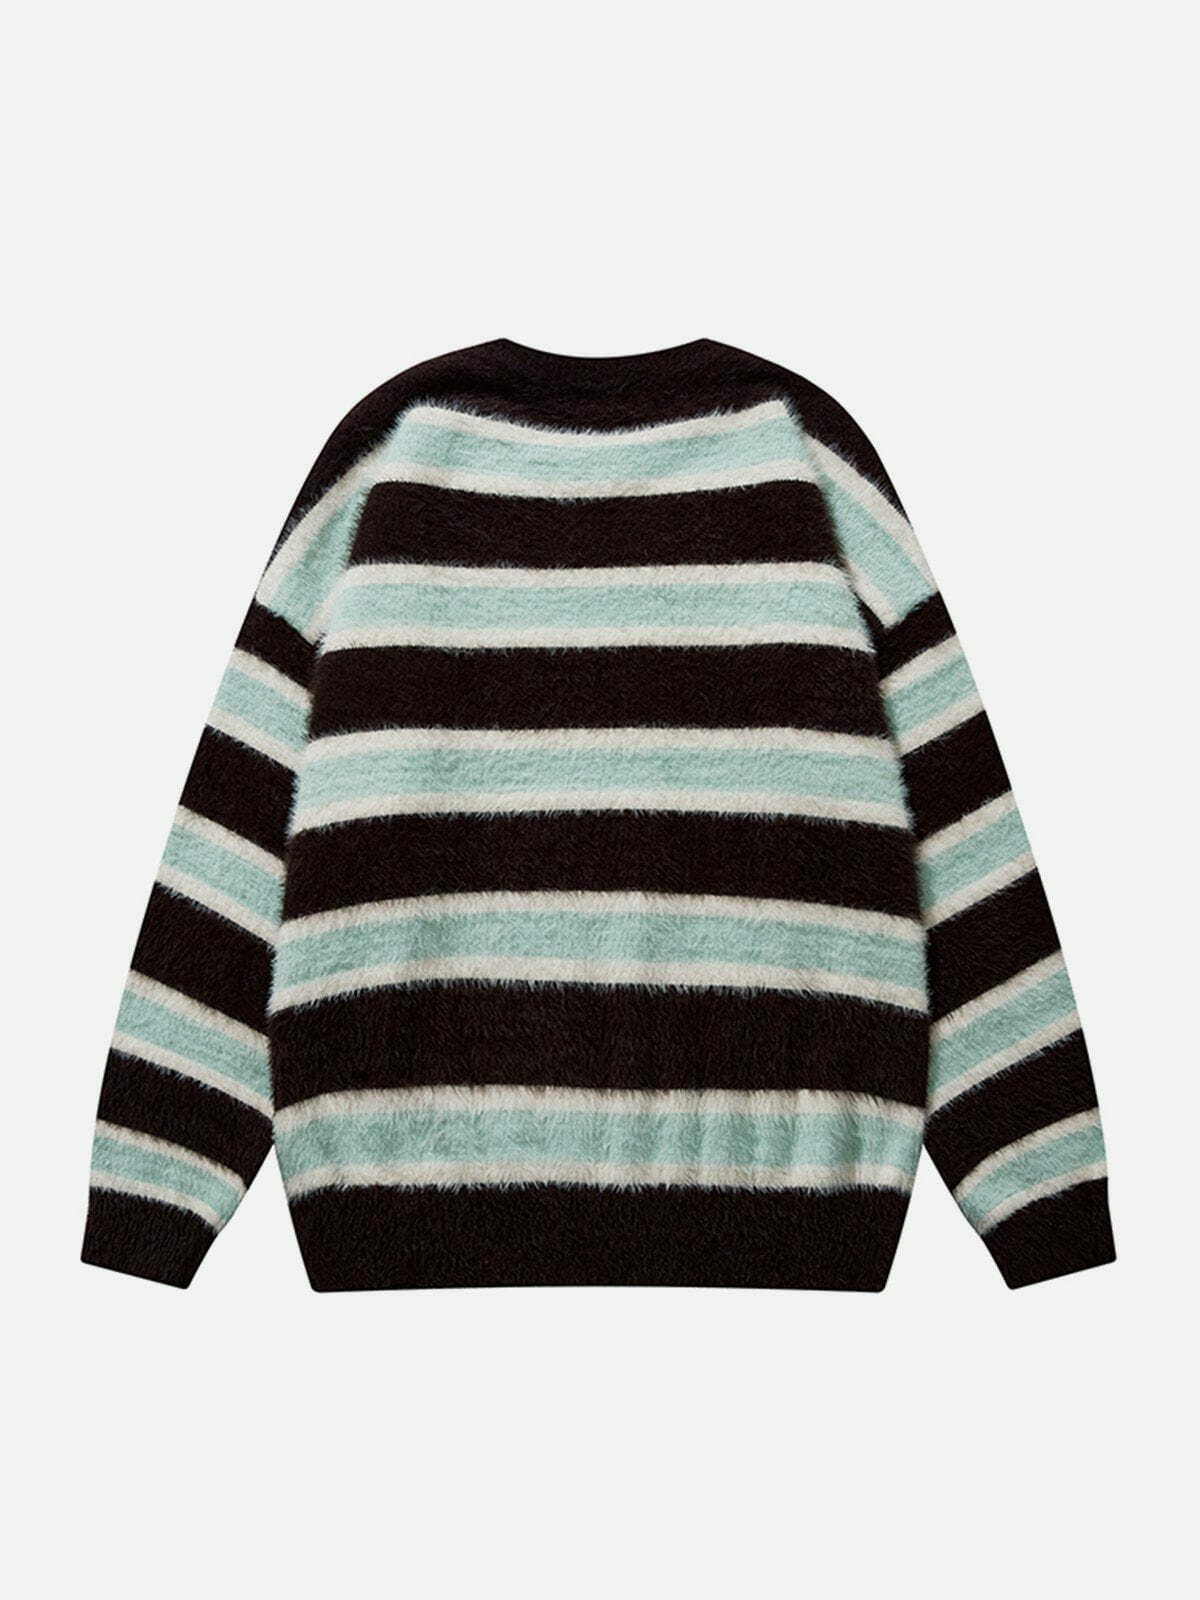 striped jacquard sweater edgy urban knitwear 3330